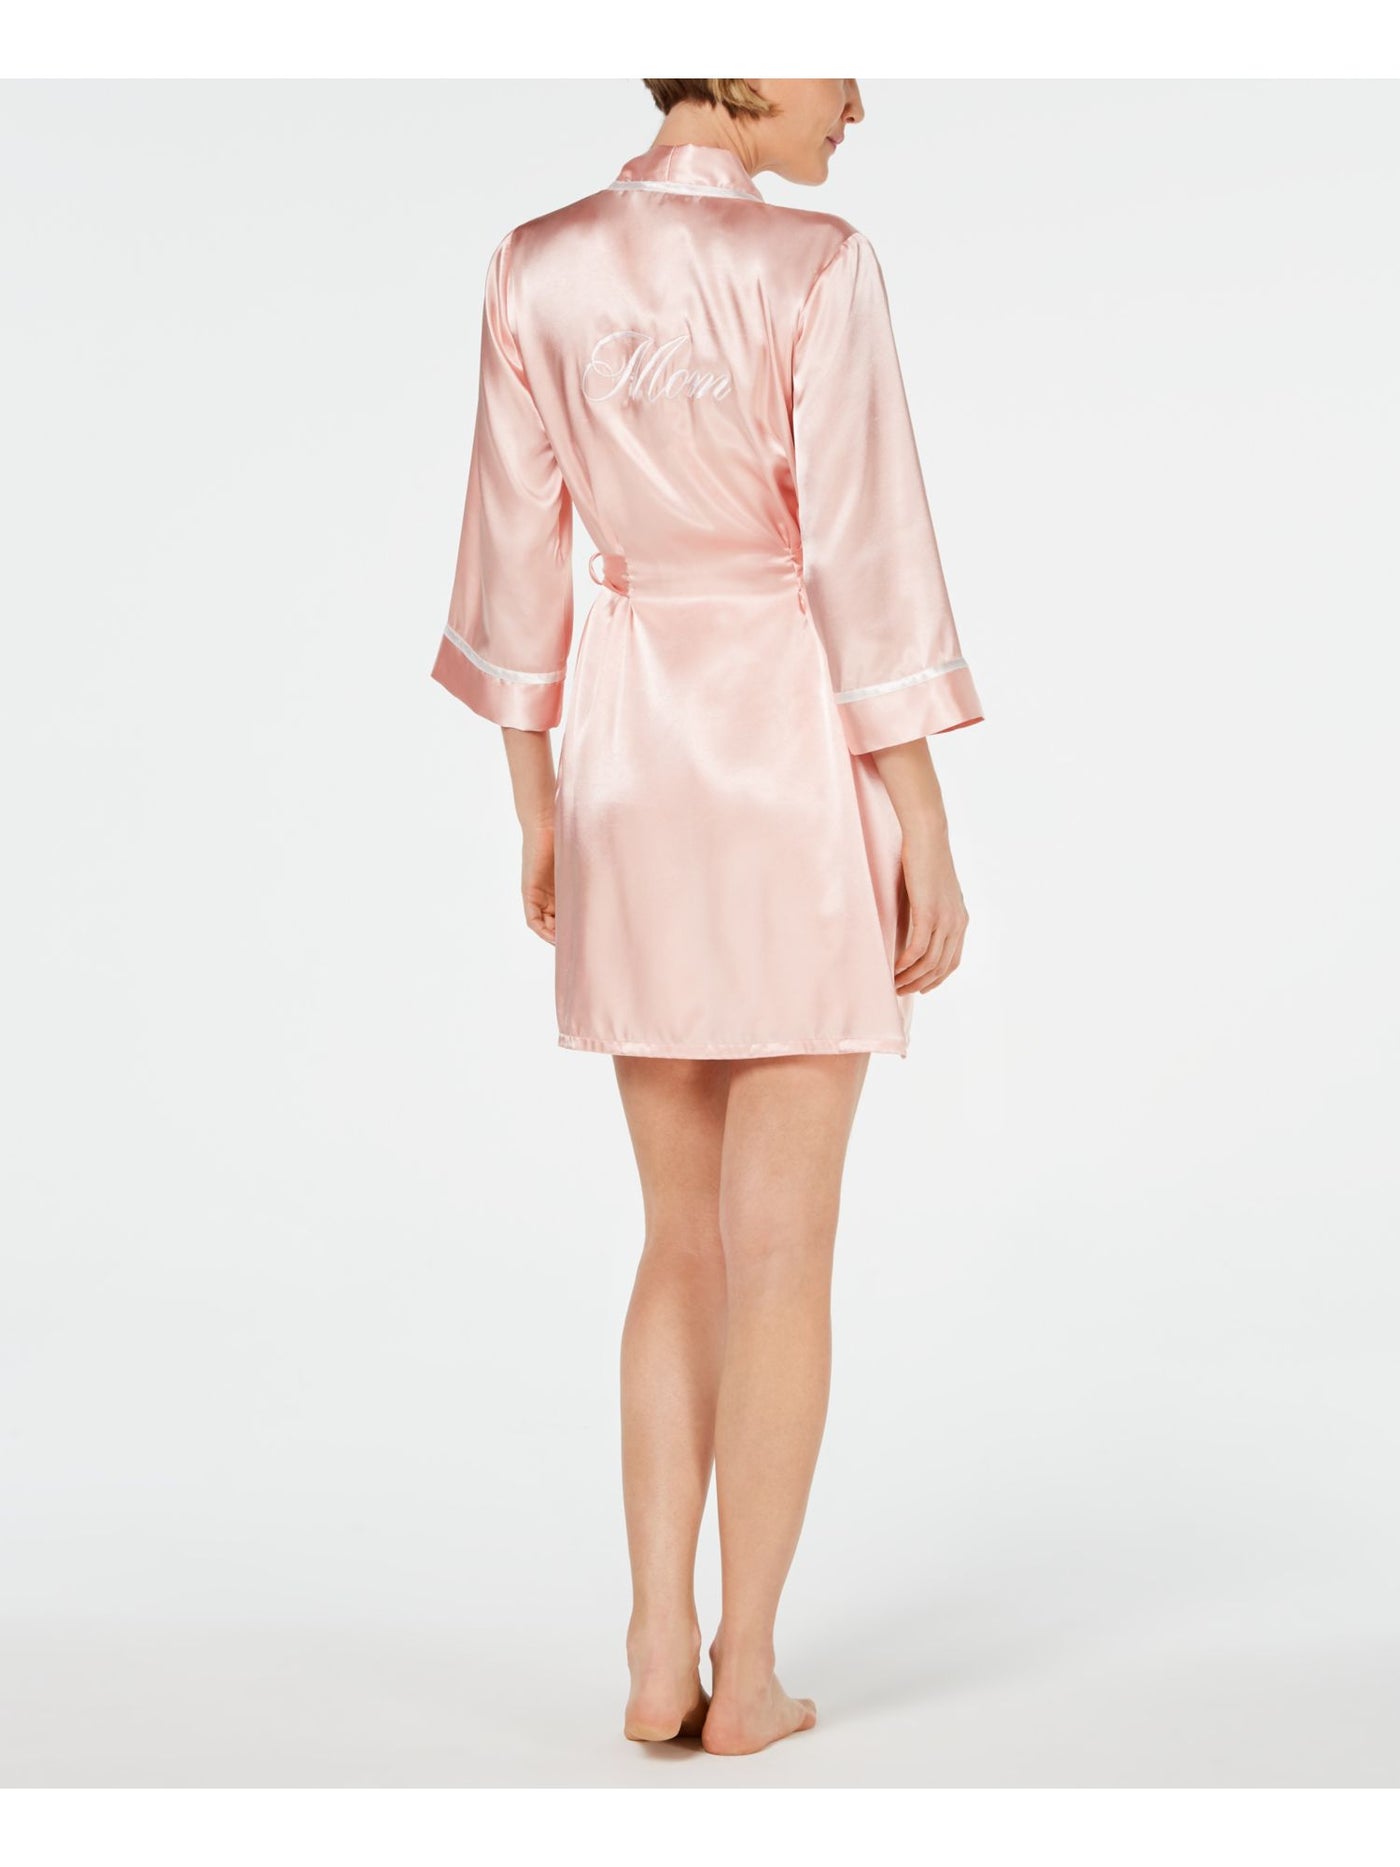 LINEA DONATELLA Womens Pink Lace Tank Top Robe Pajamas M